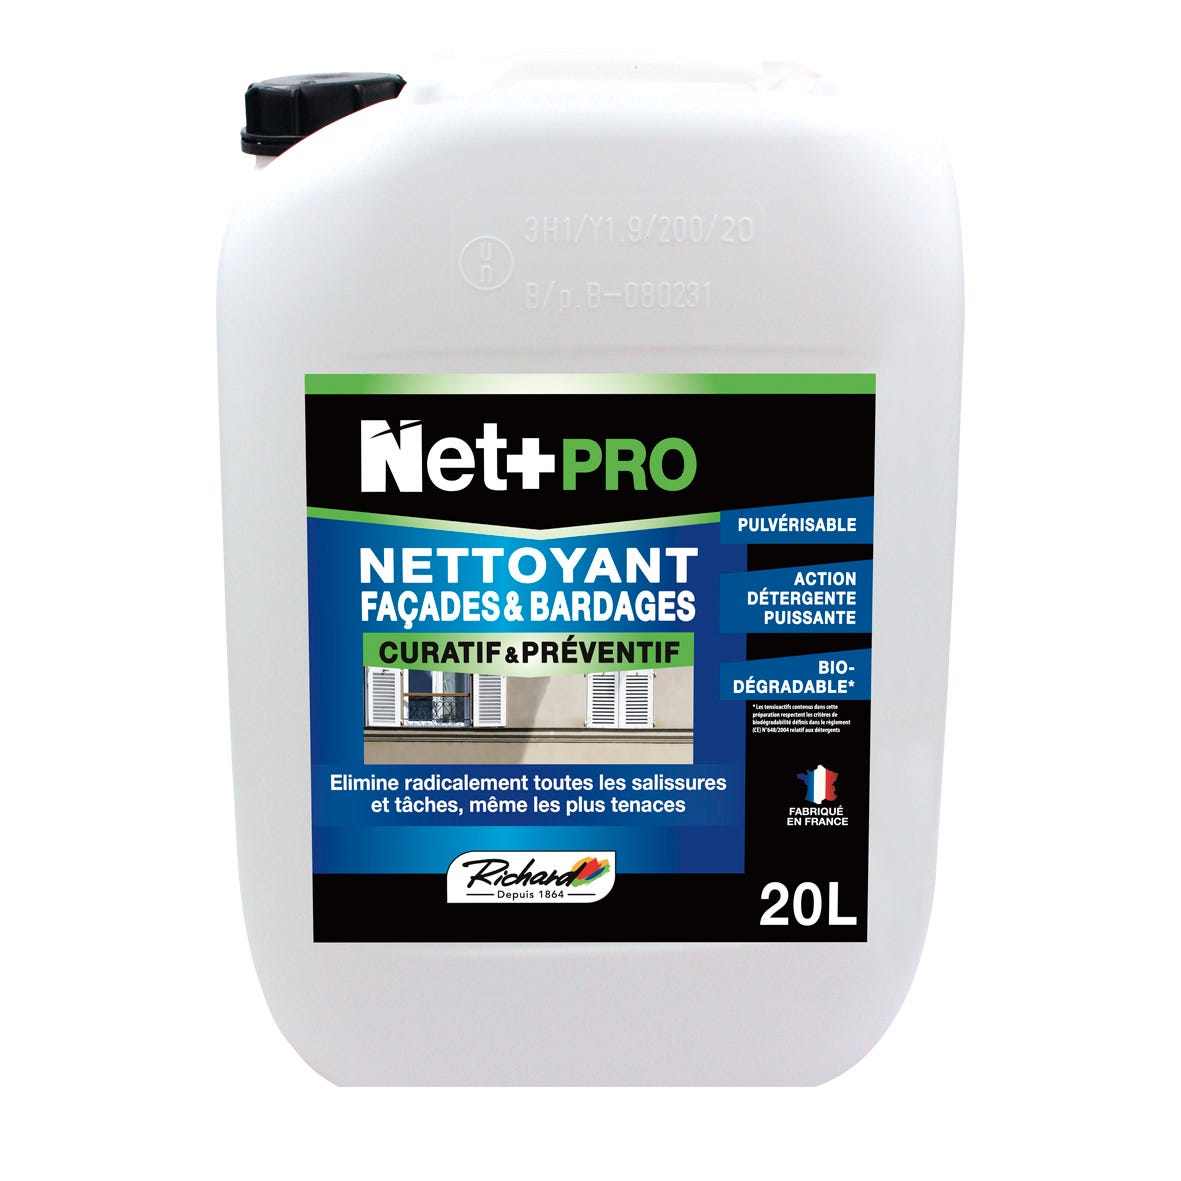 Net+ Pro Nettoyant Façade & Bardages - 20 Litres